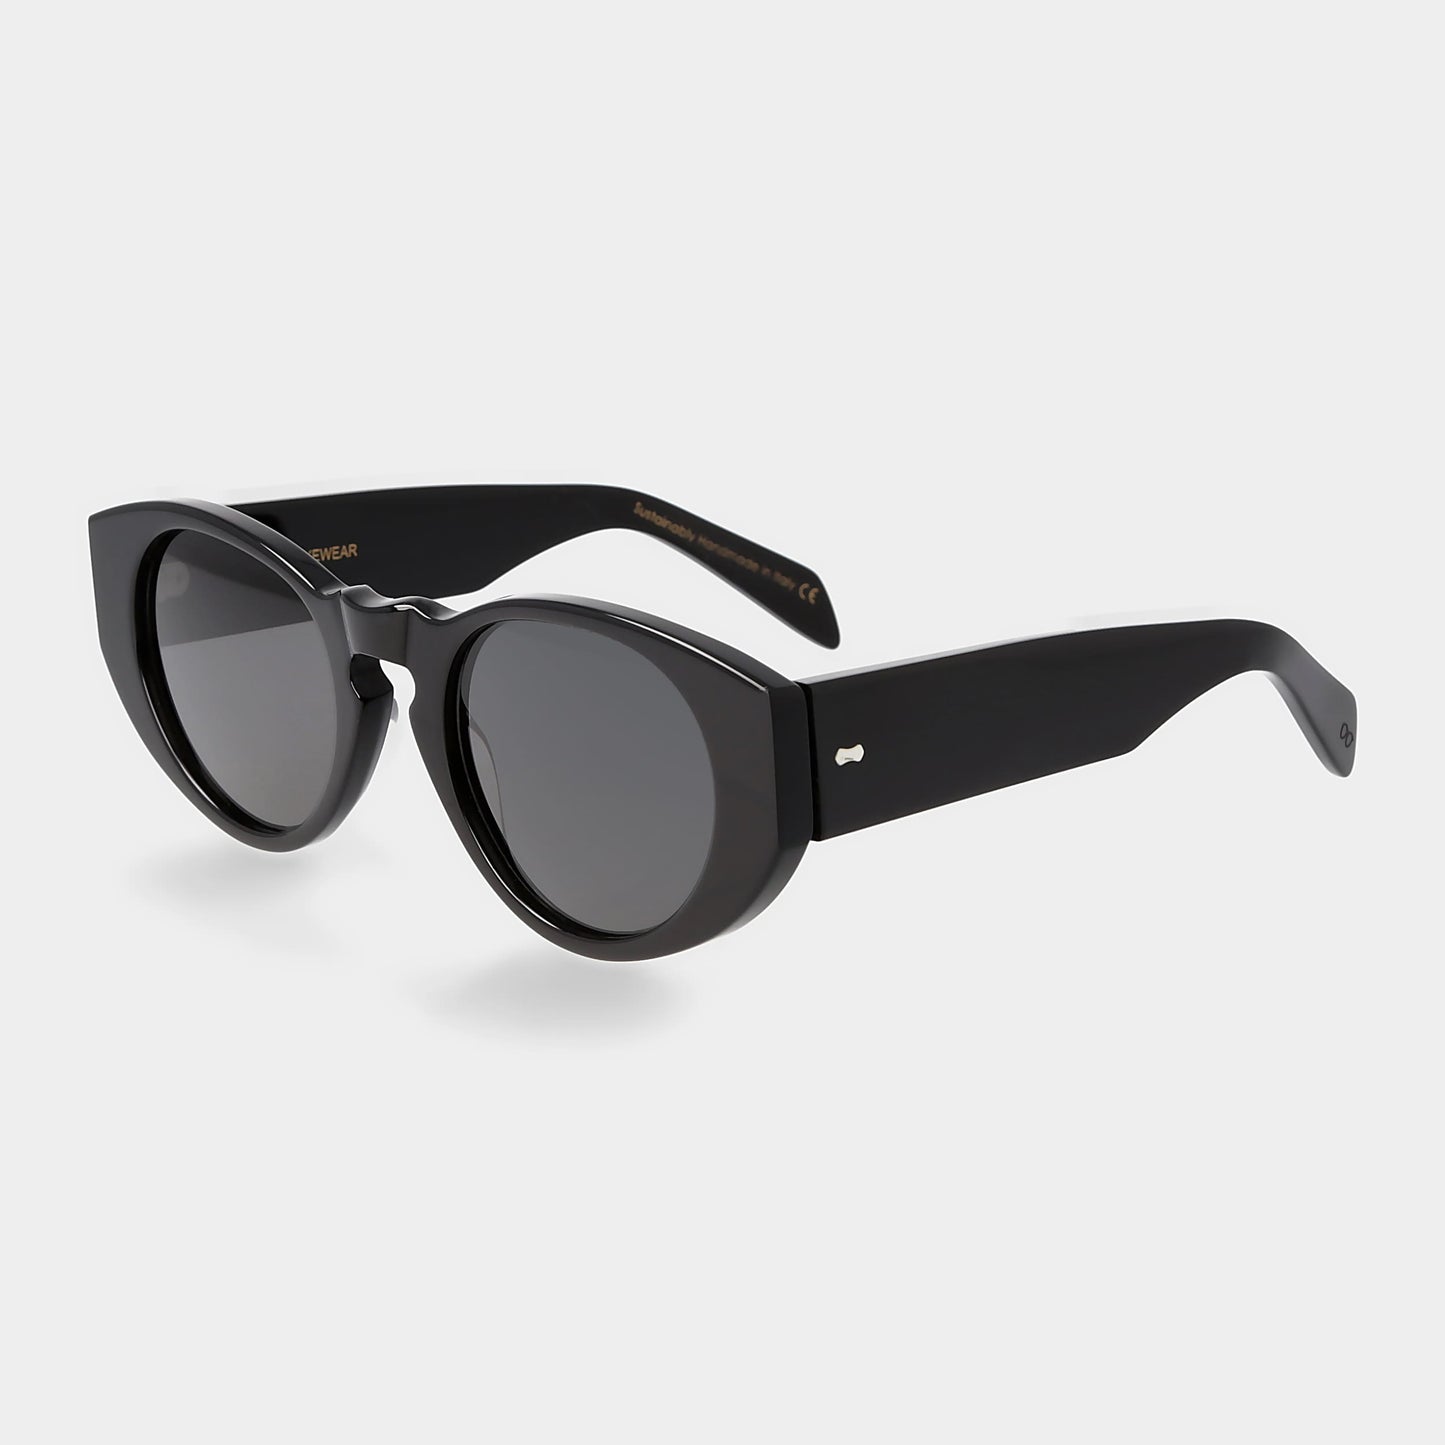 TBD Eyewear Madras Eco Black / Grey